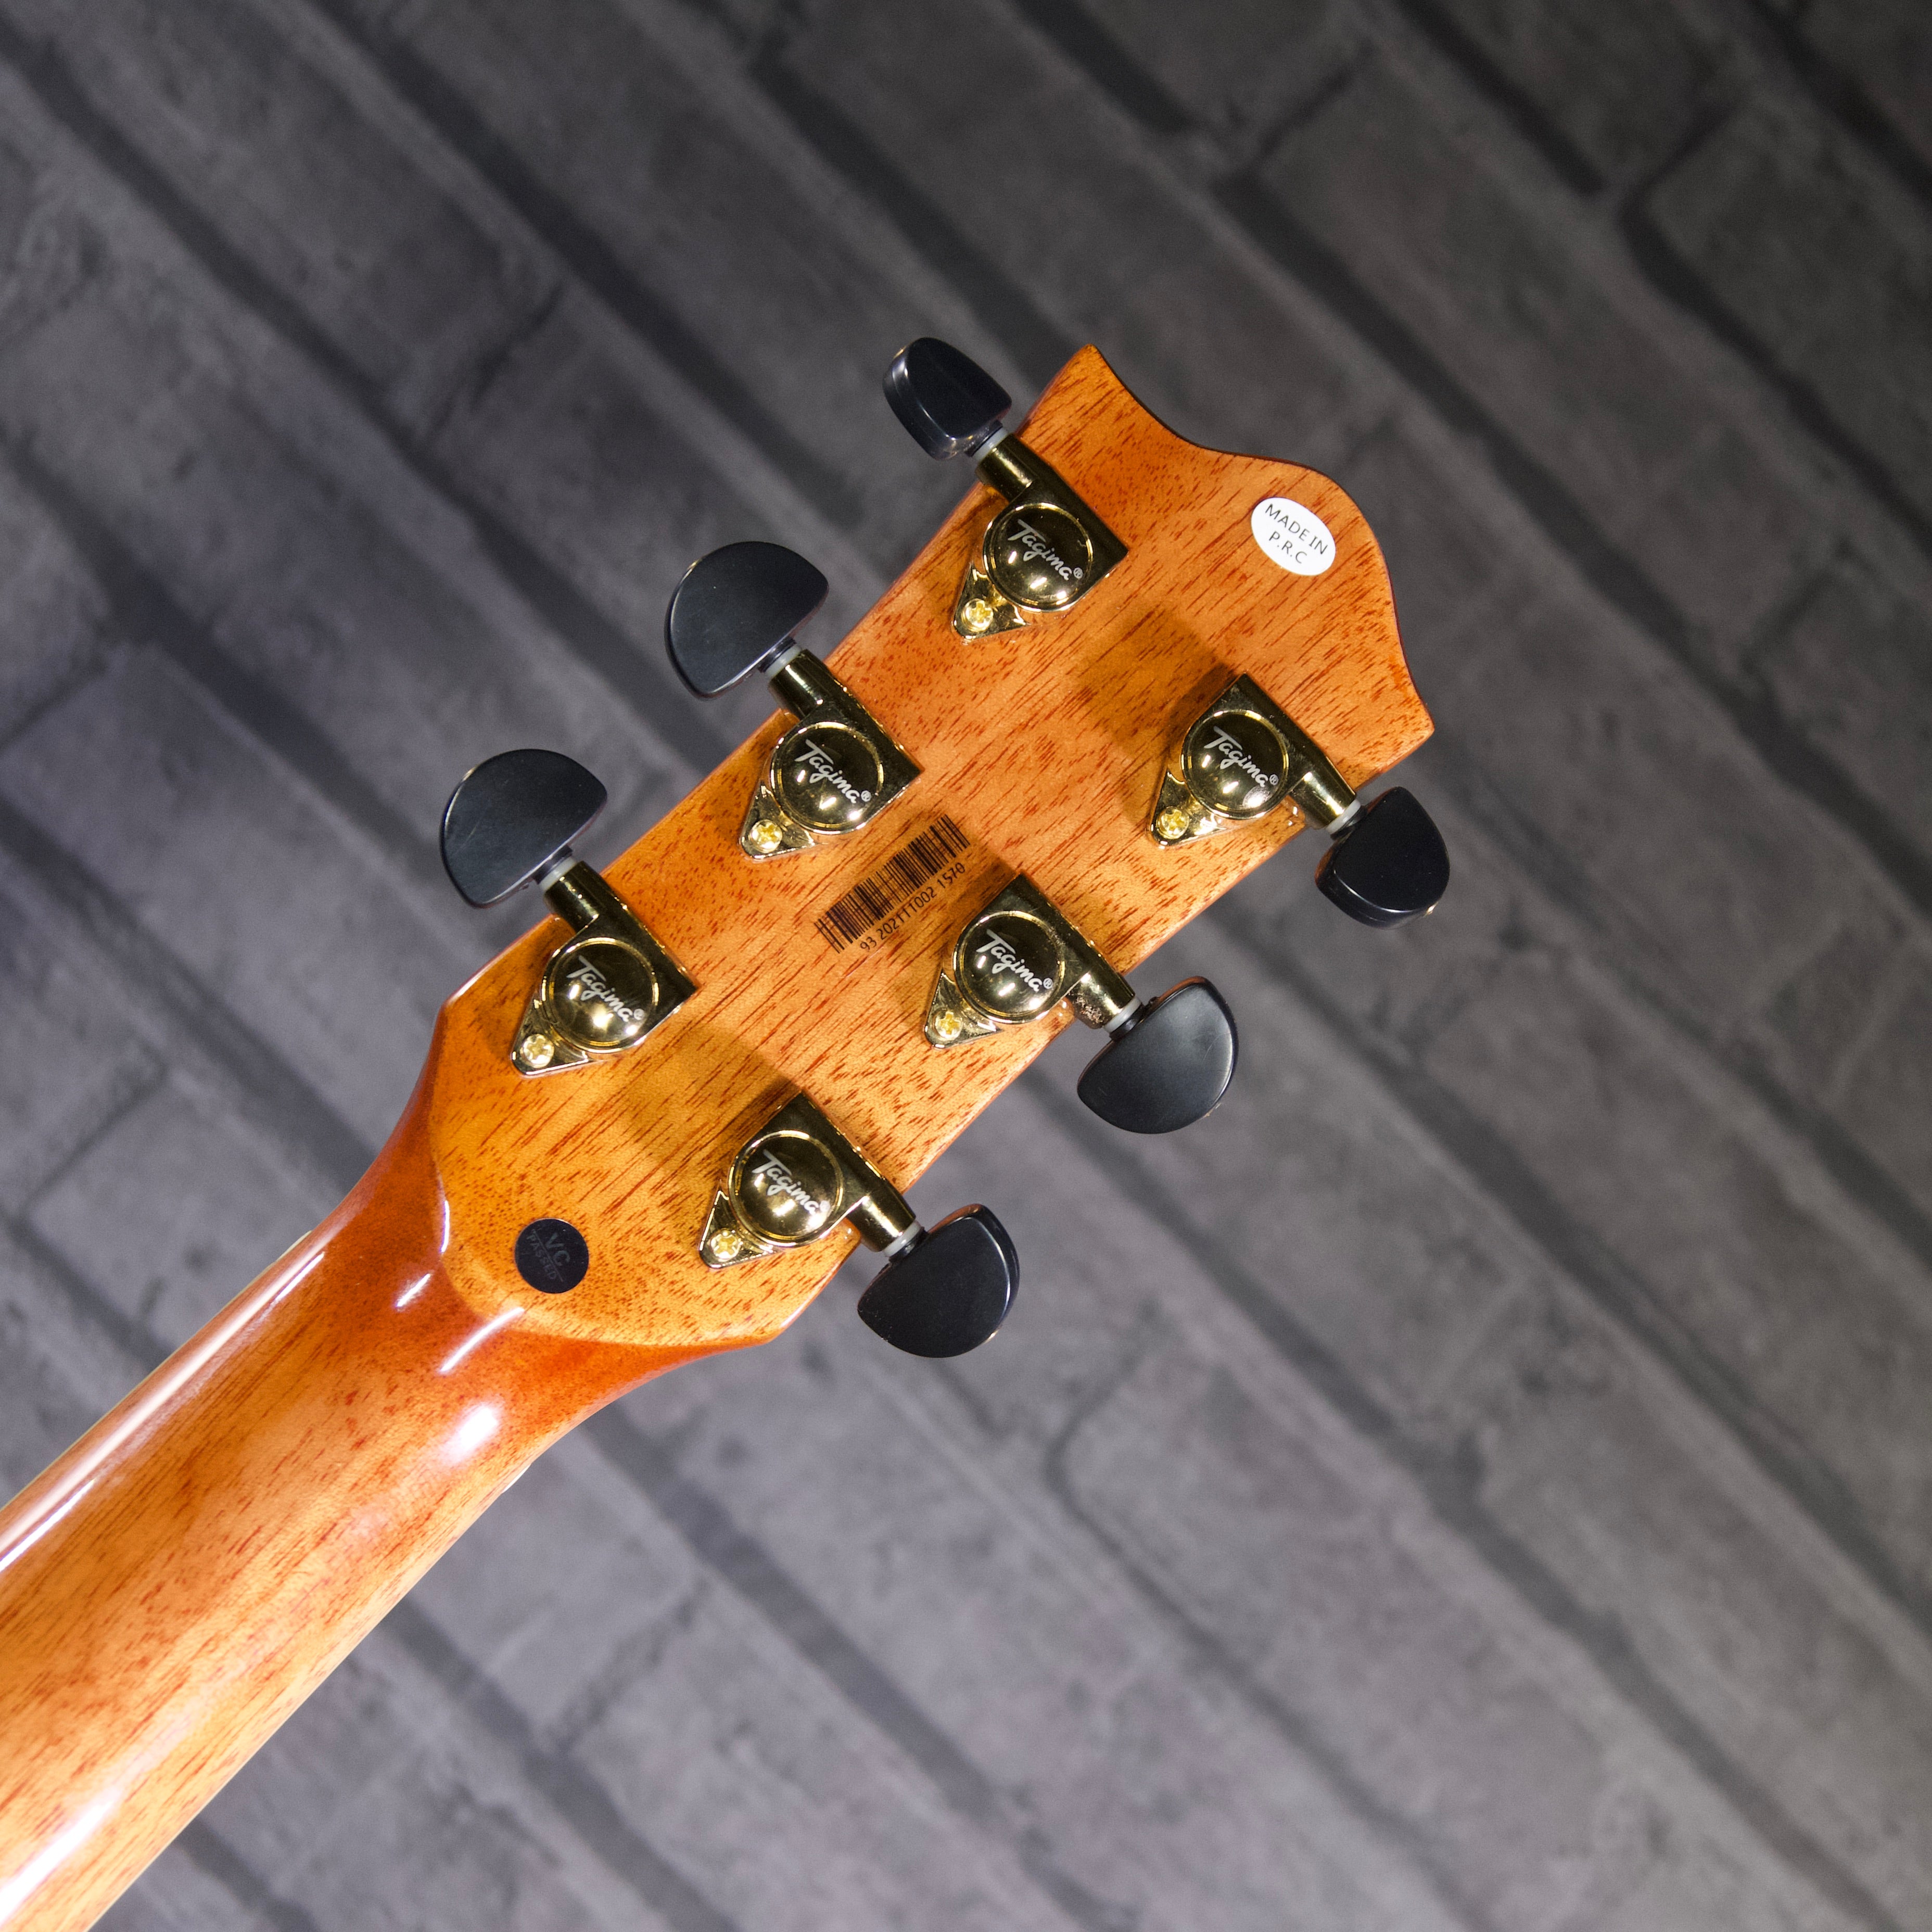 Tagima Canada Series Fernie EQ Small Body Acoustic Guitar (Natural)